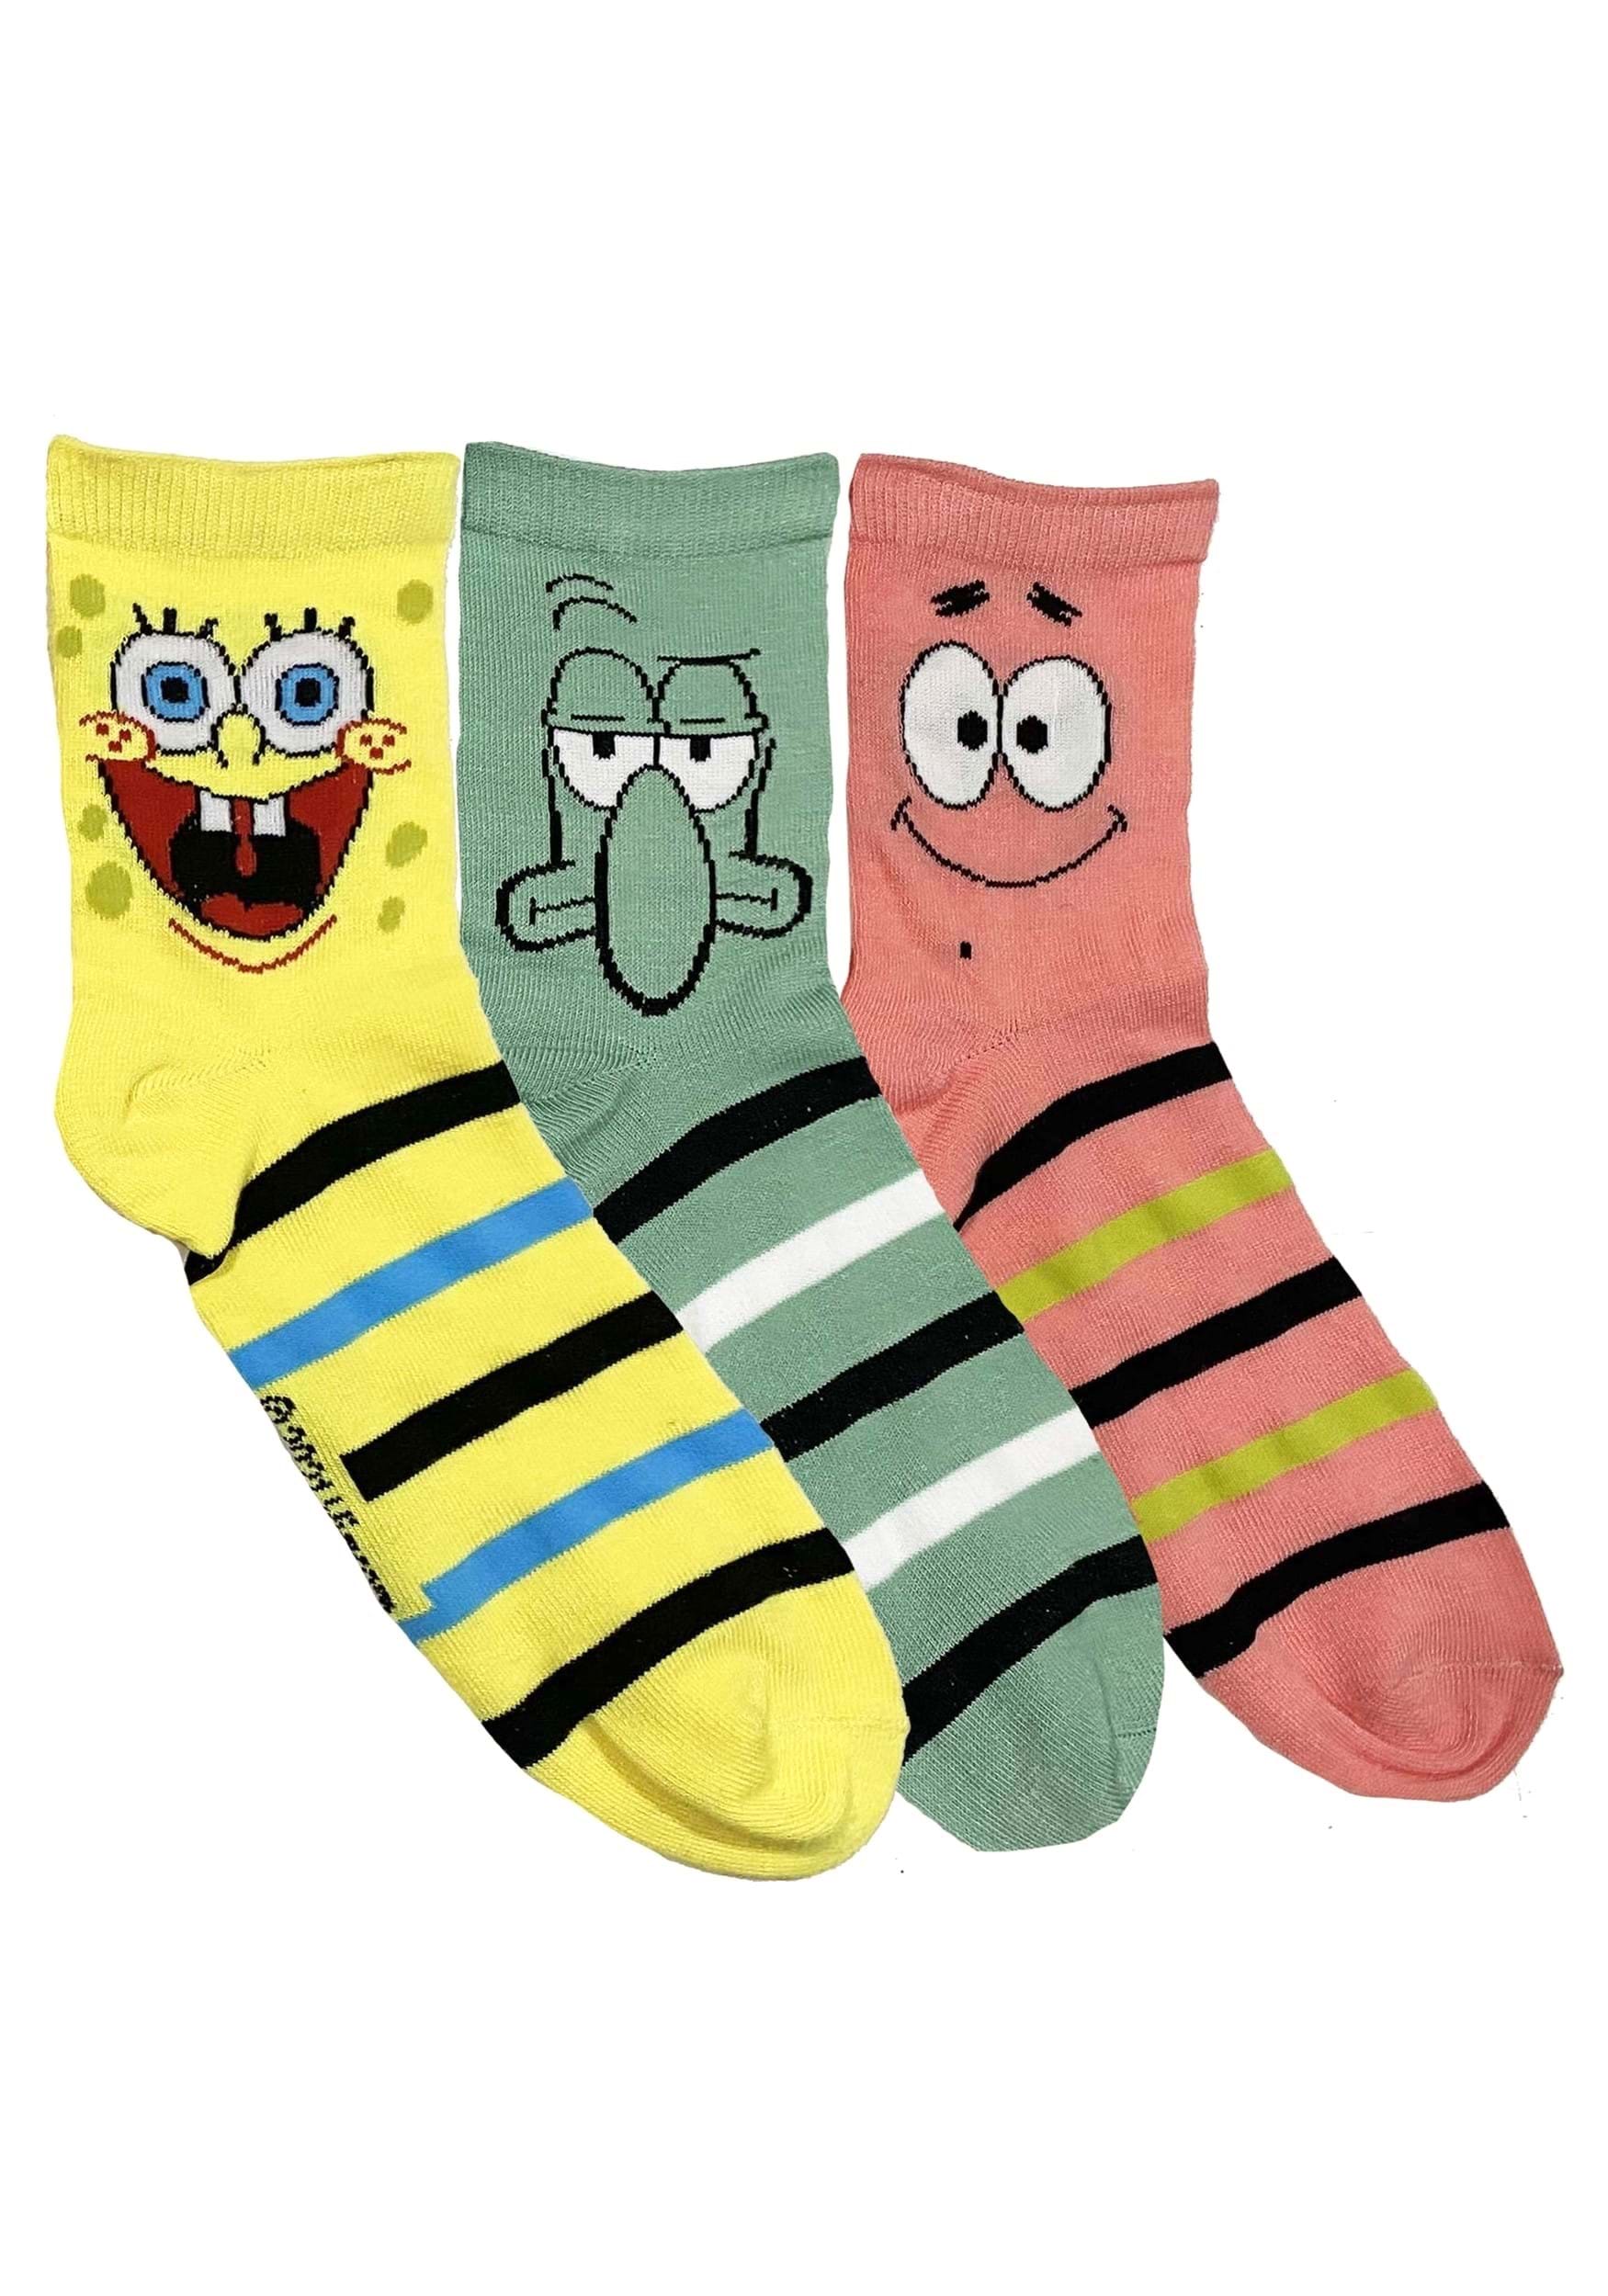 3 Pair of Adult Spongebob Striped Socks | Spongebob Apparel